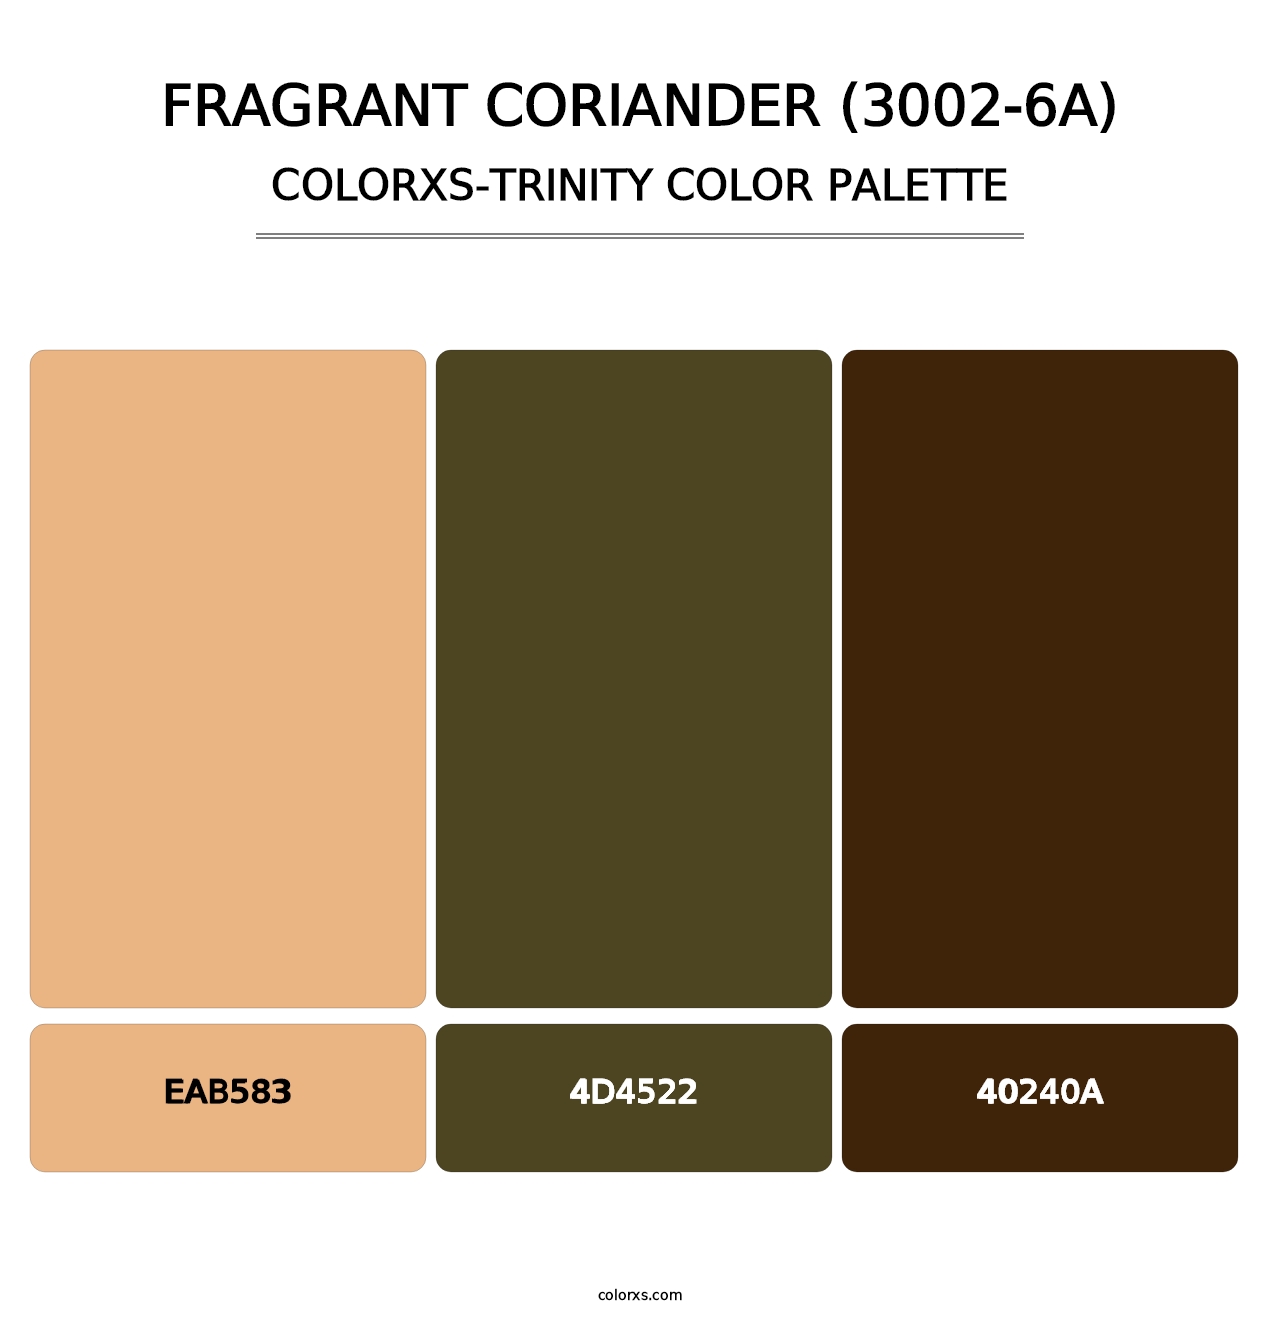 Fragrant Coriander (3002-6A) - Colorxs Trinity Palette